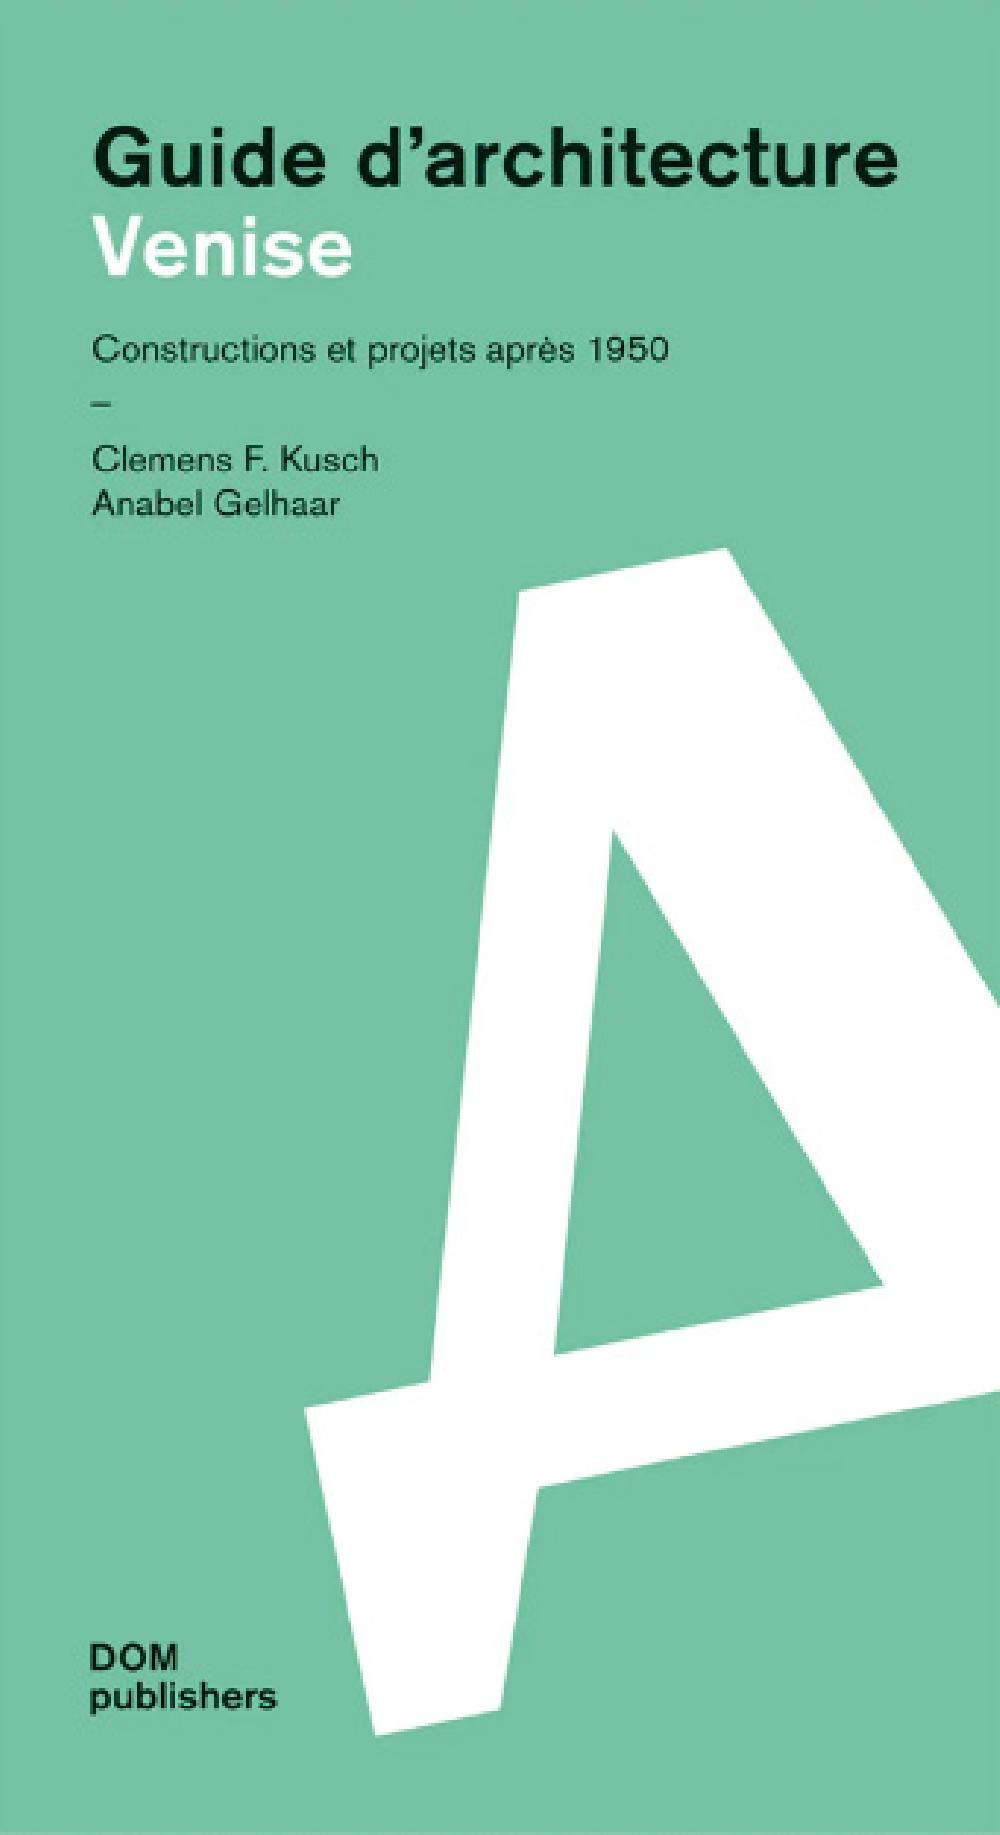 VENISE - Guide d'architecture - Clemens - F. Kusch - Anabel Gelhaar